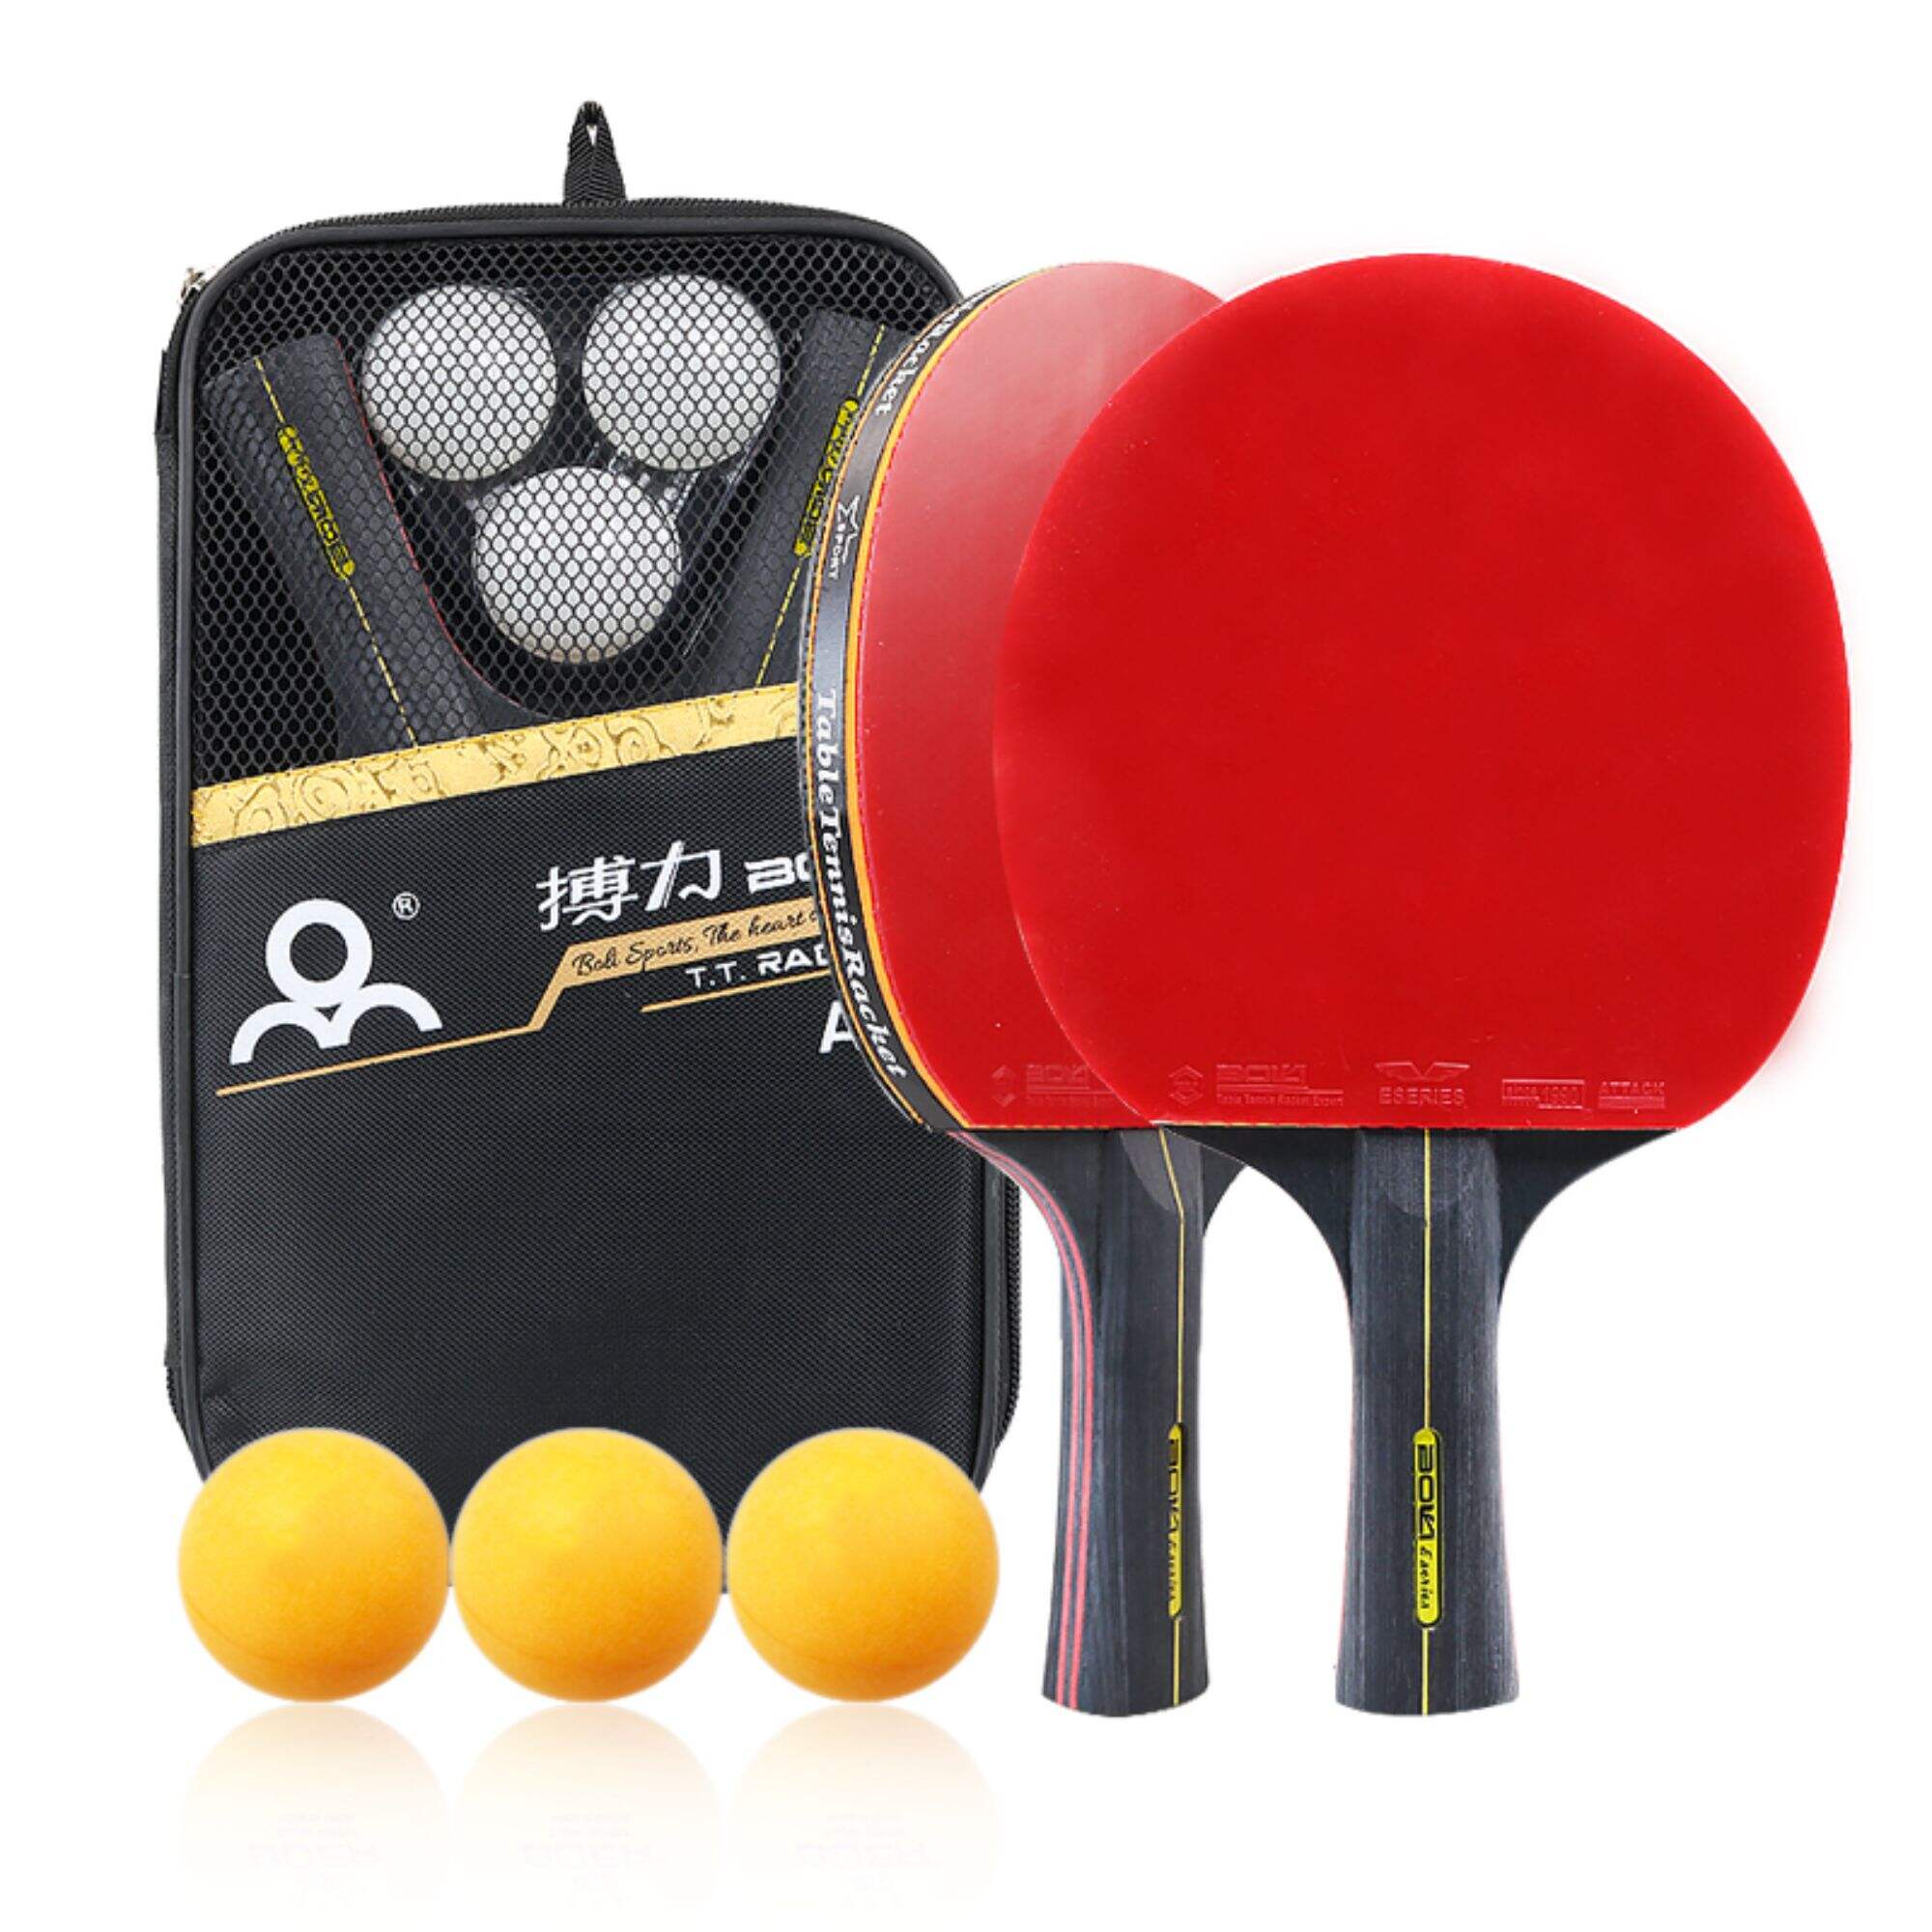 A11 Boli Professional High Quality Table Tennis Racket Set